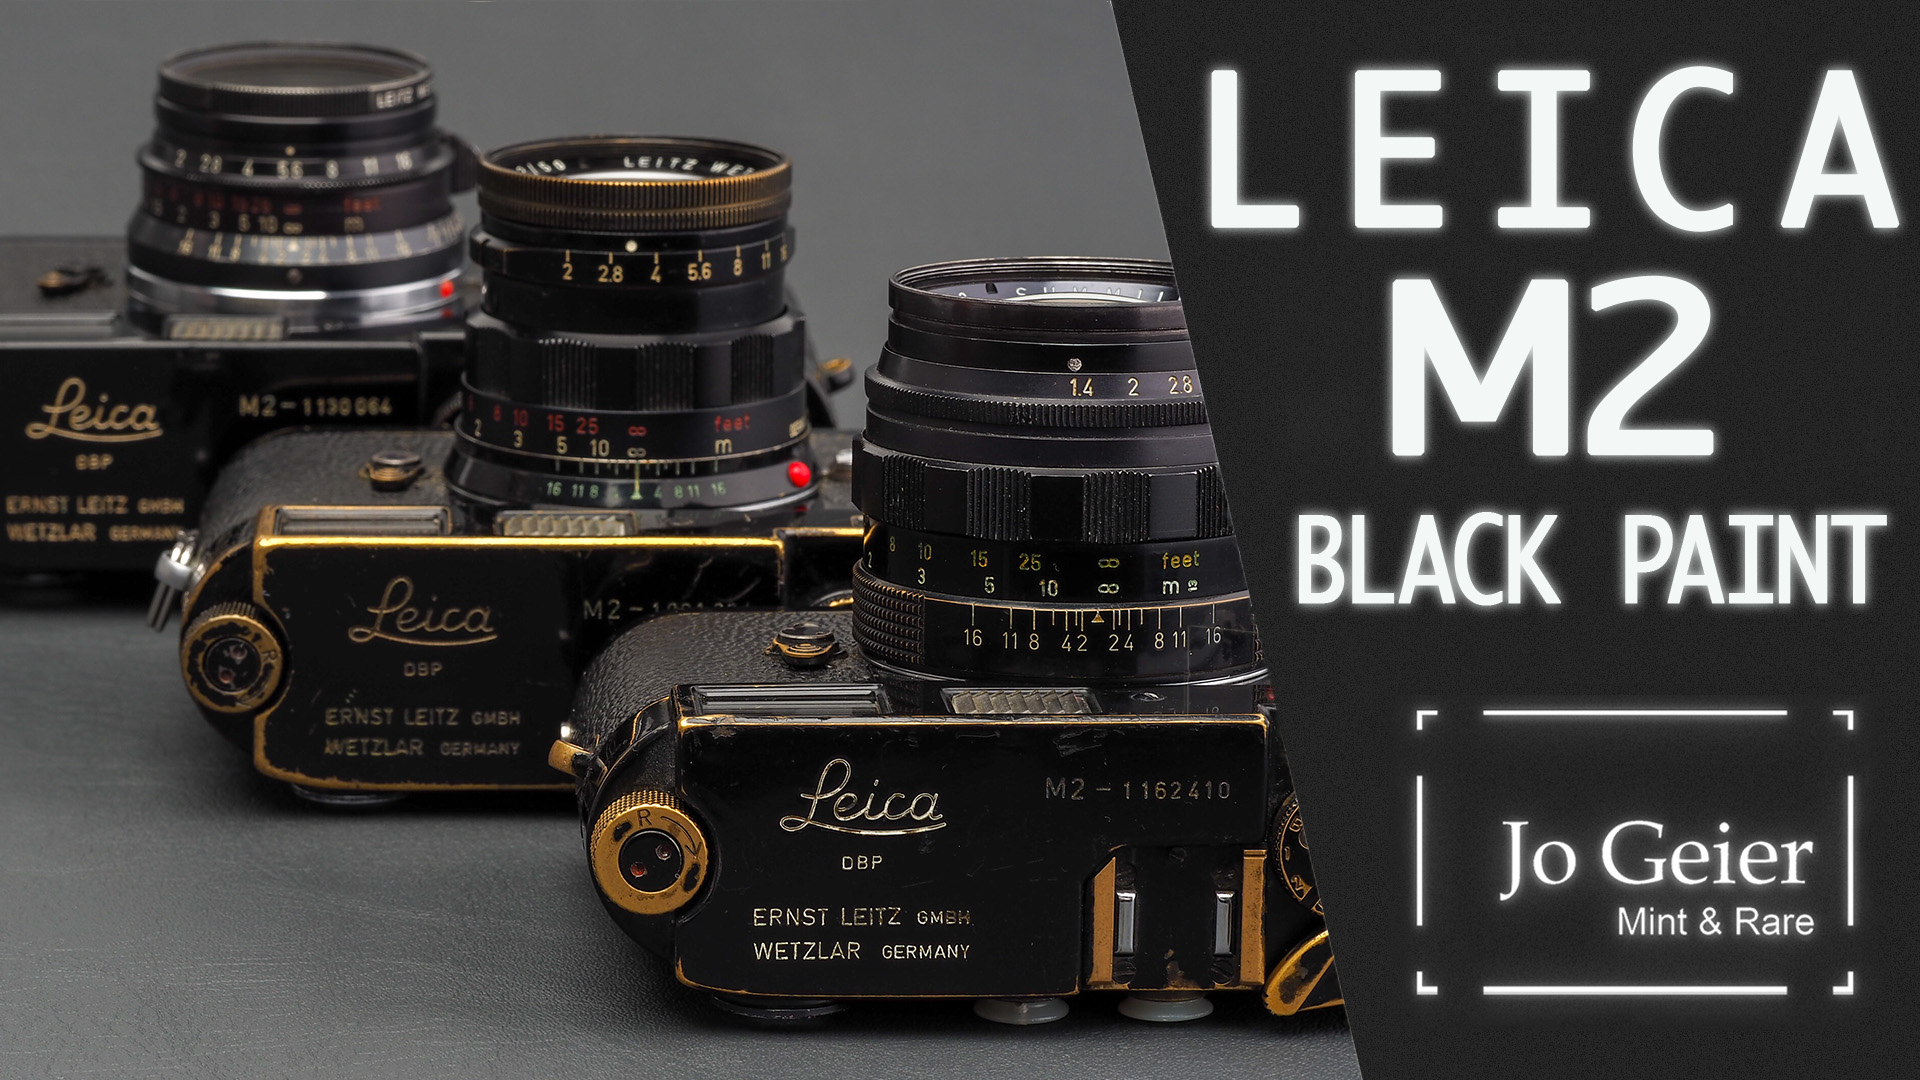 Leitz Leica M2 Black Paint Cameras and Lenses - Jo Geier - Mint & Rare